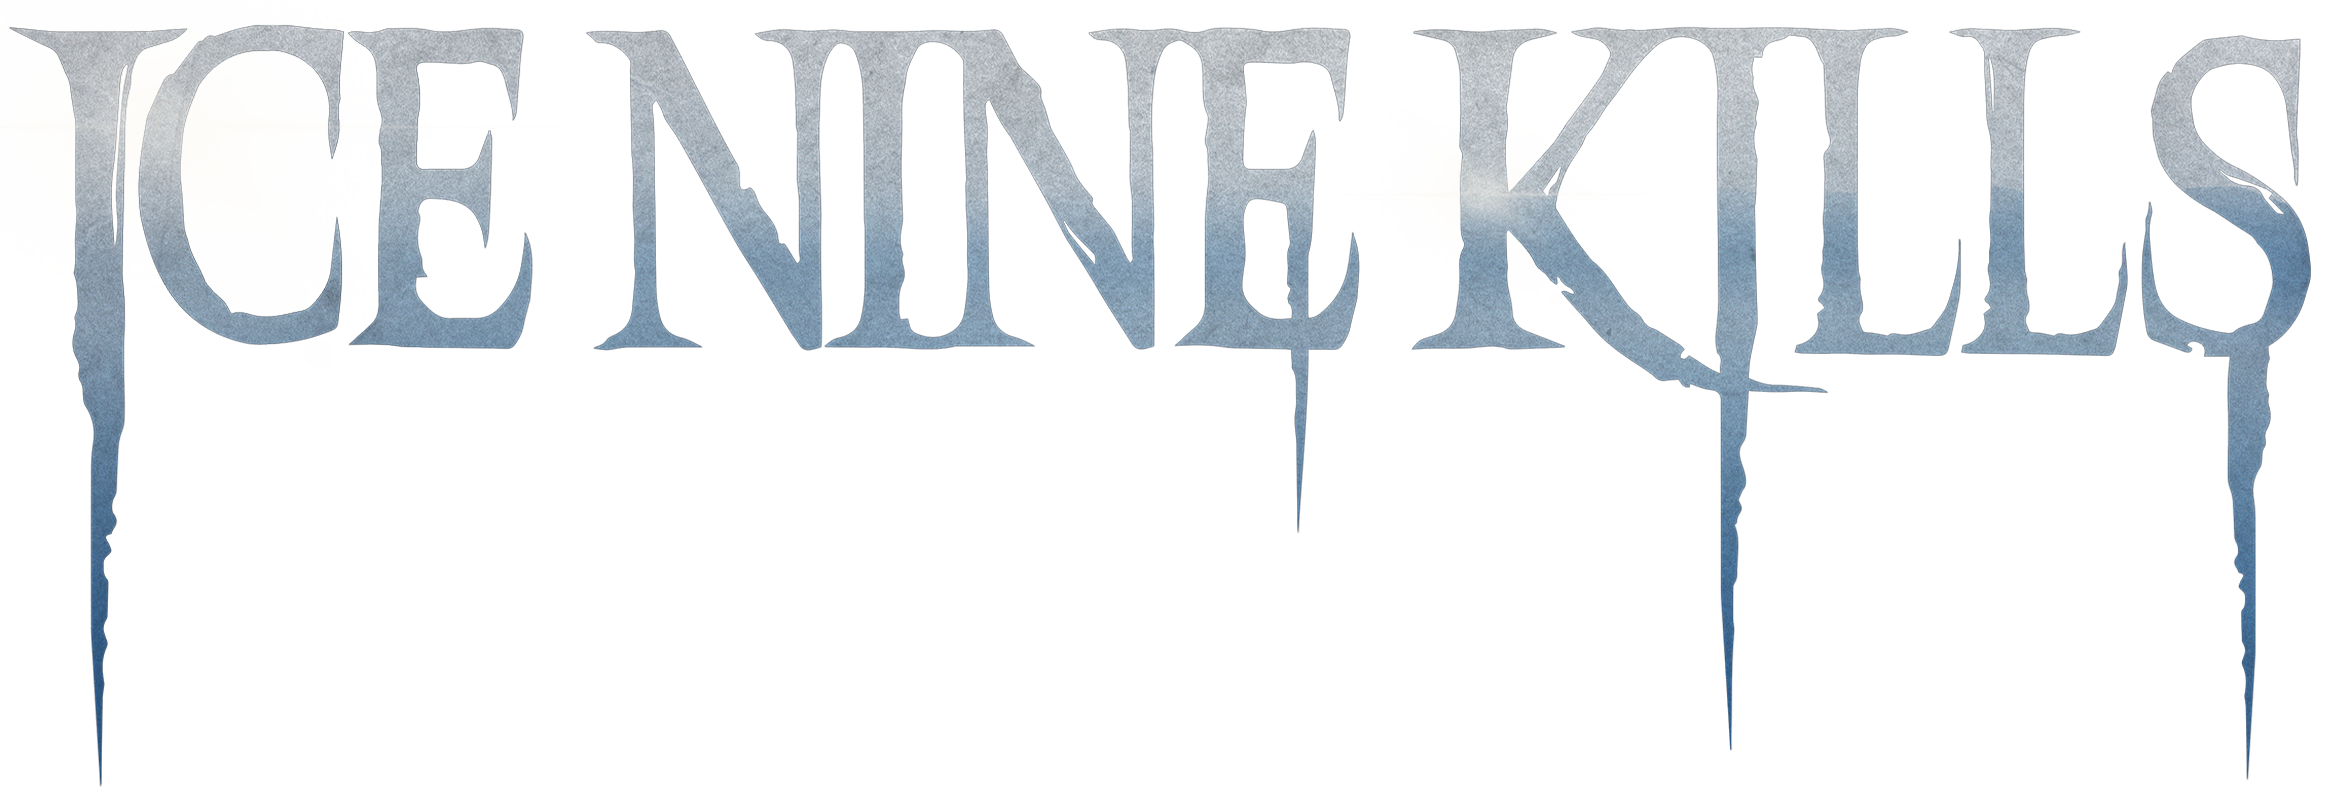 Ice Nine Kills logo